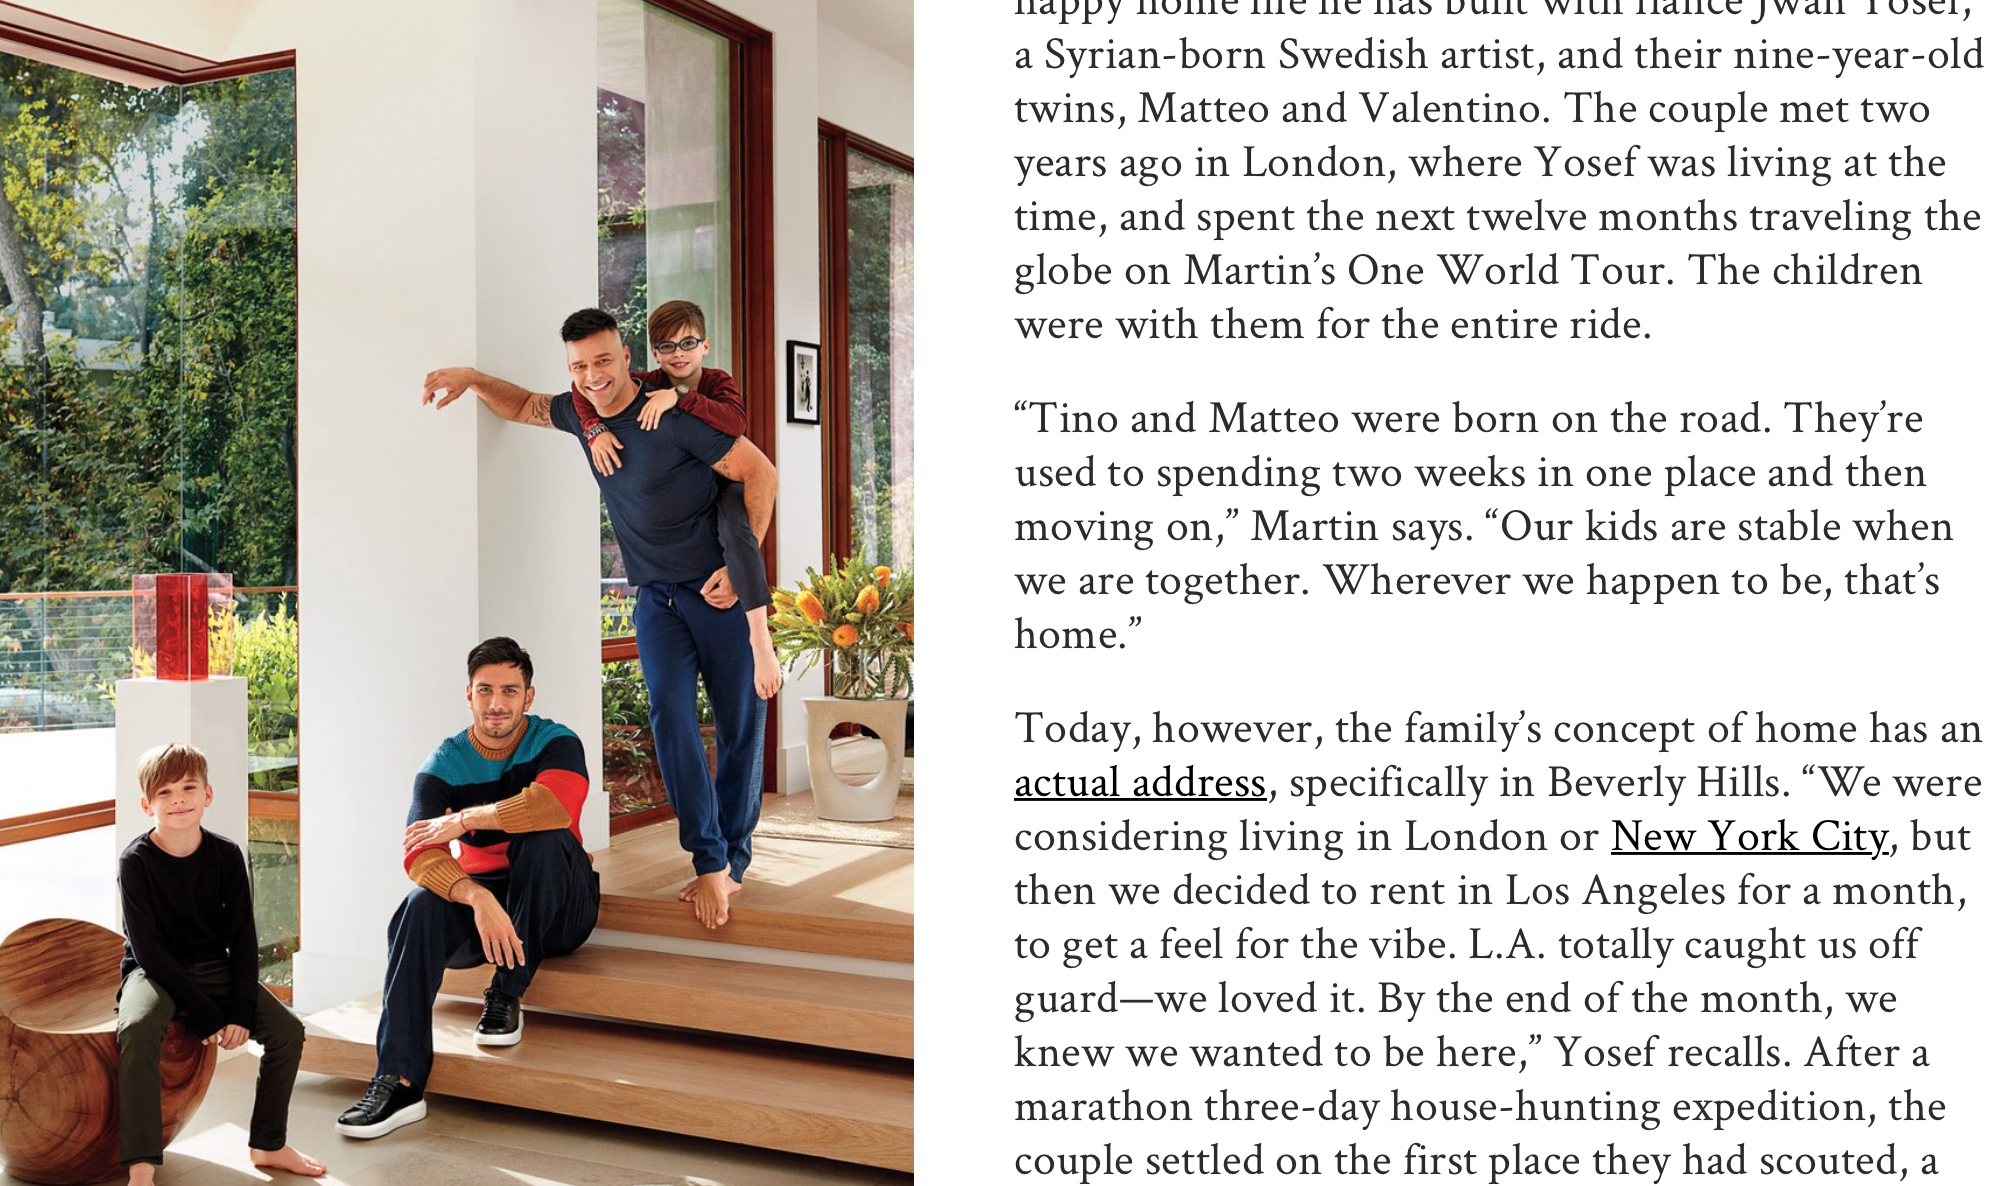 Ricky Martin presume orgulloso de ‘marido’ e hijos en la portada de AD